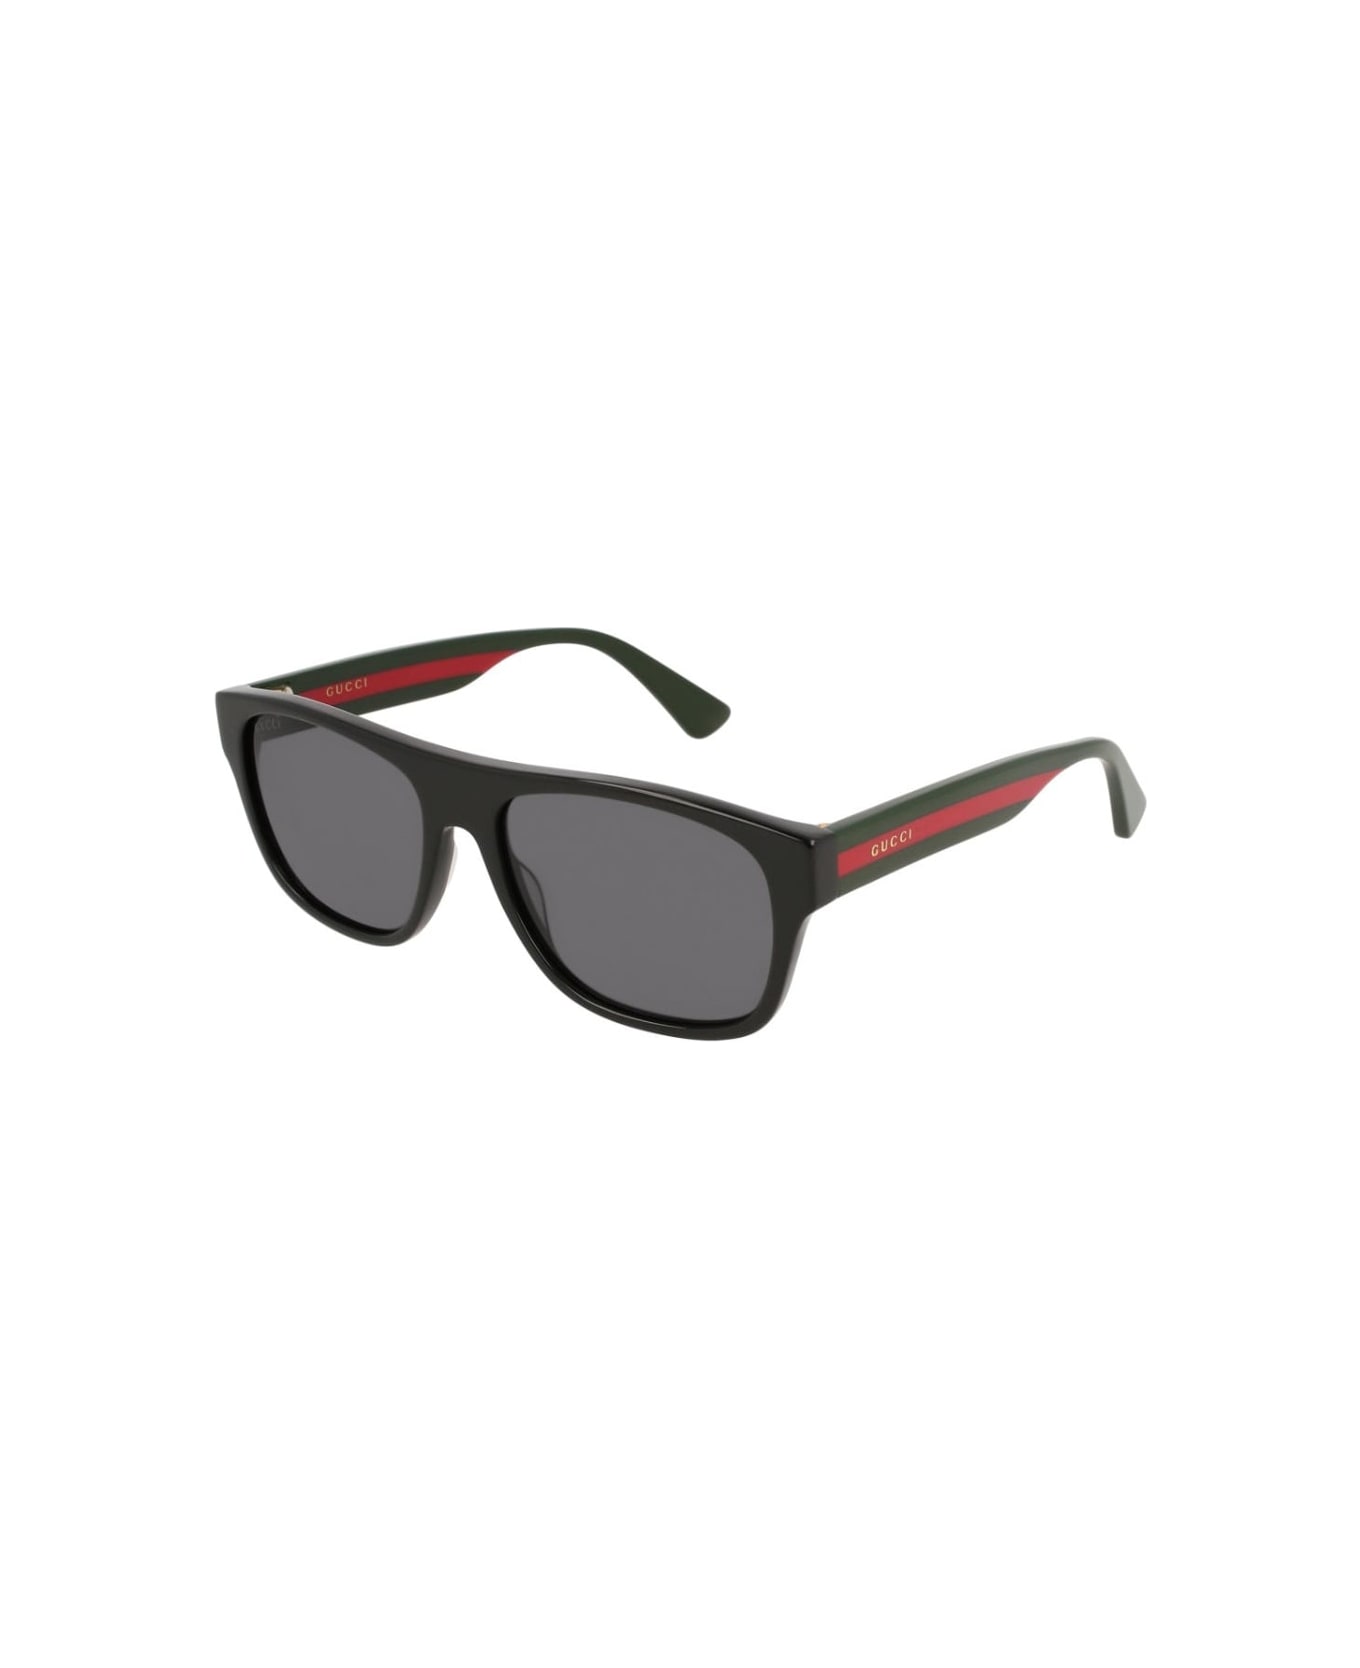 Gucci Eyewear GG0341 001 Sunglasses サングラス